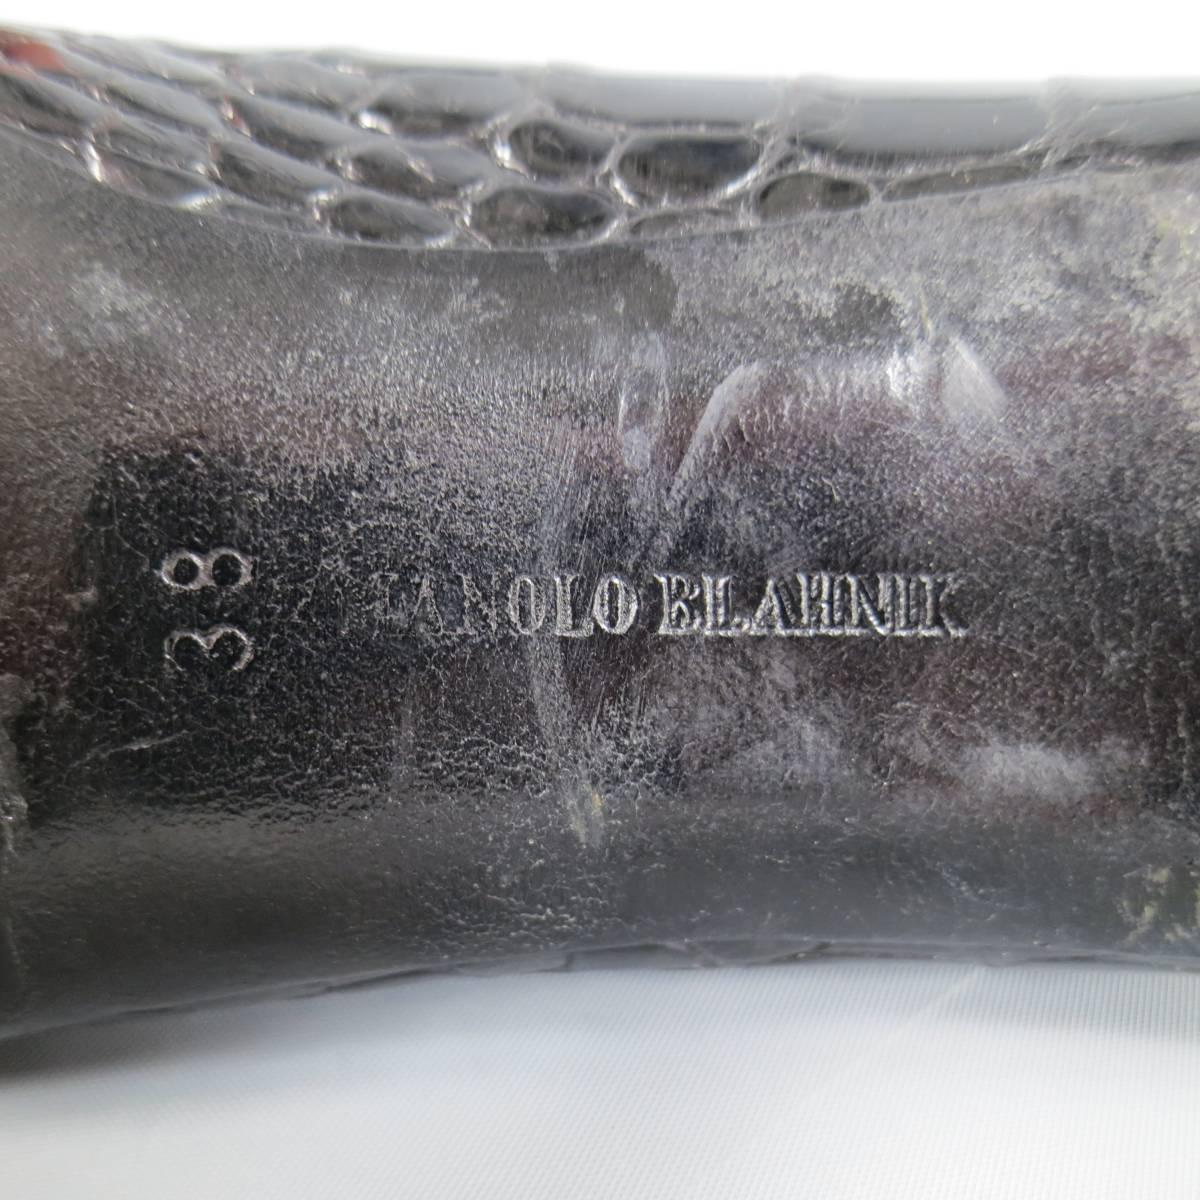 MANOLO BLAHNIK Size 8 Black Alligator Skin Leather Pointed Toe Pumps 3